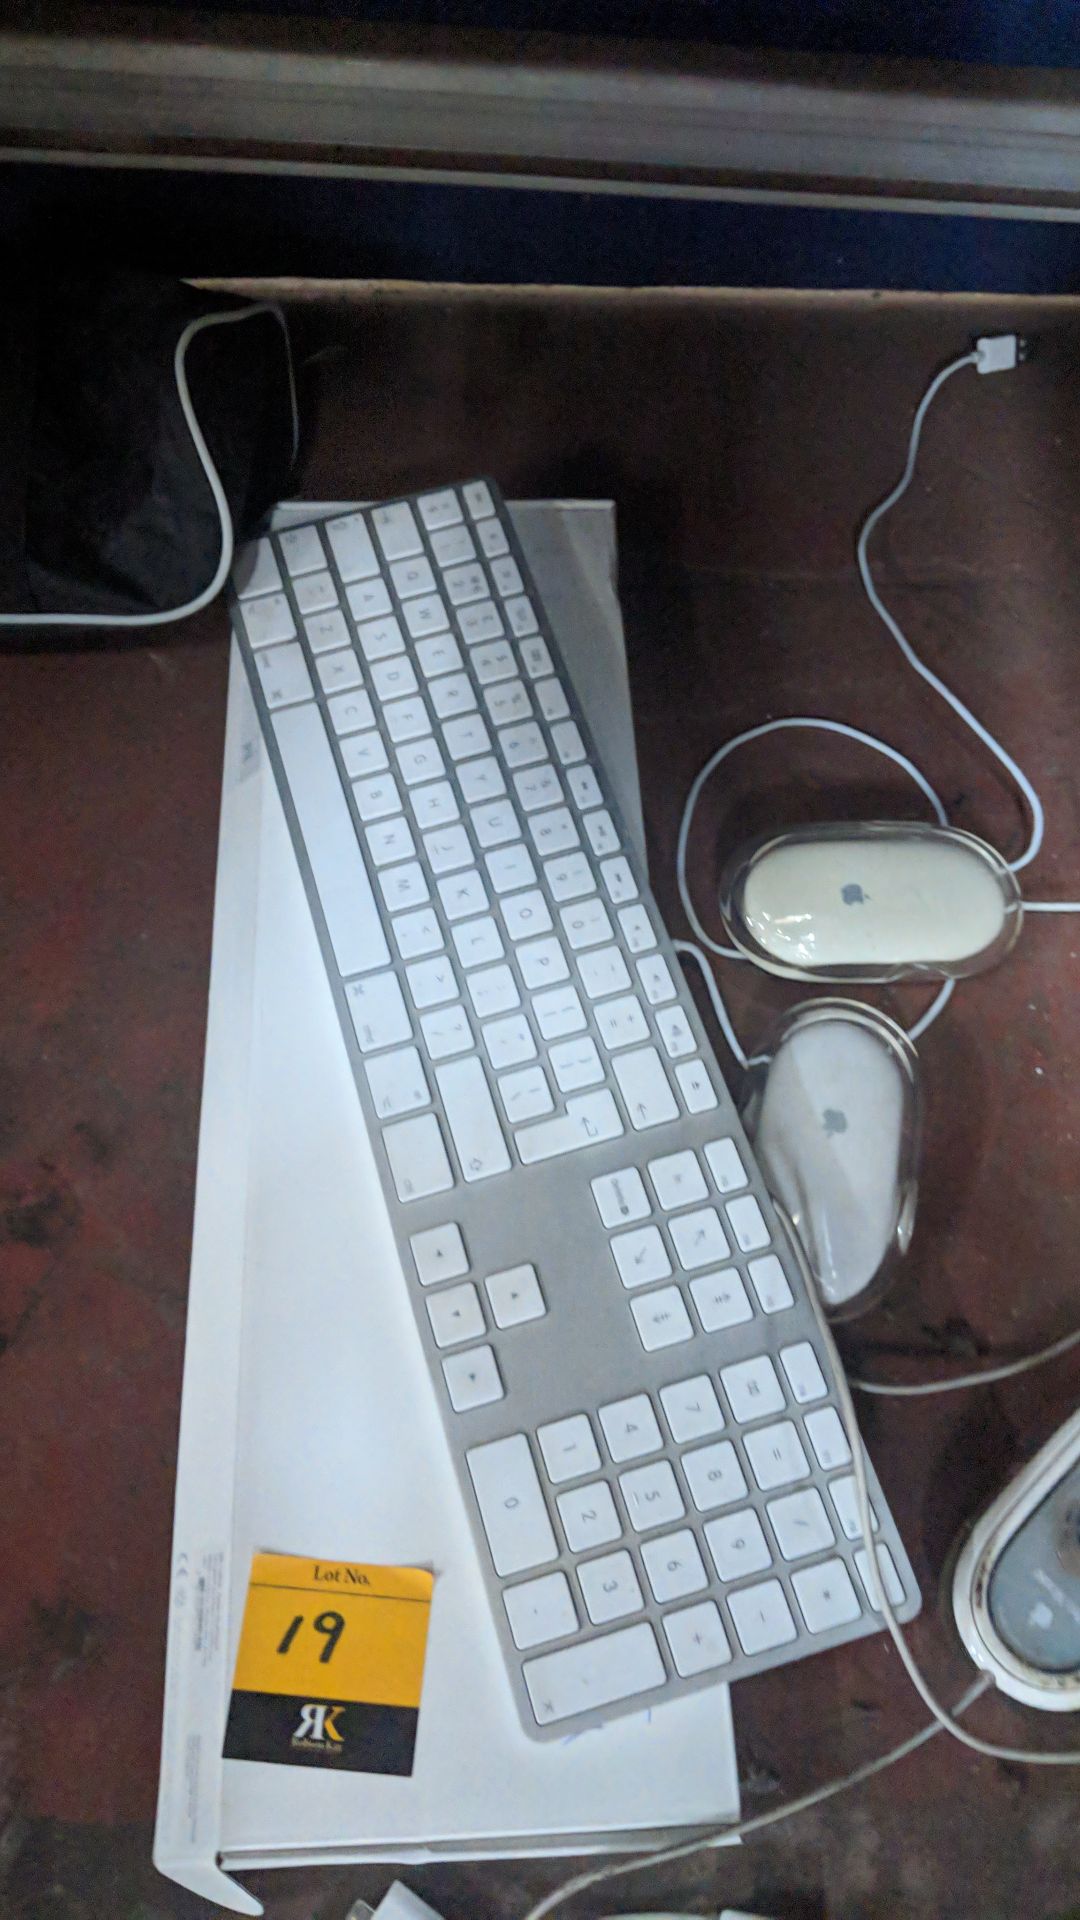 Mixed lot of Apple keyboard & mice plus display adaptor - Image 4 of 4